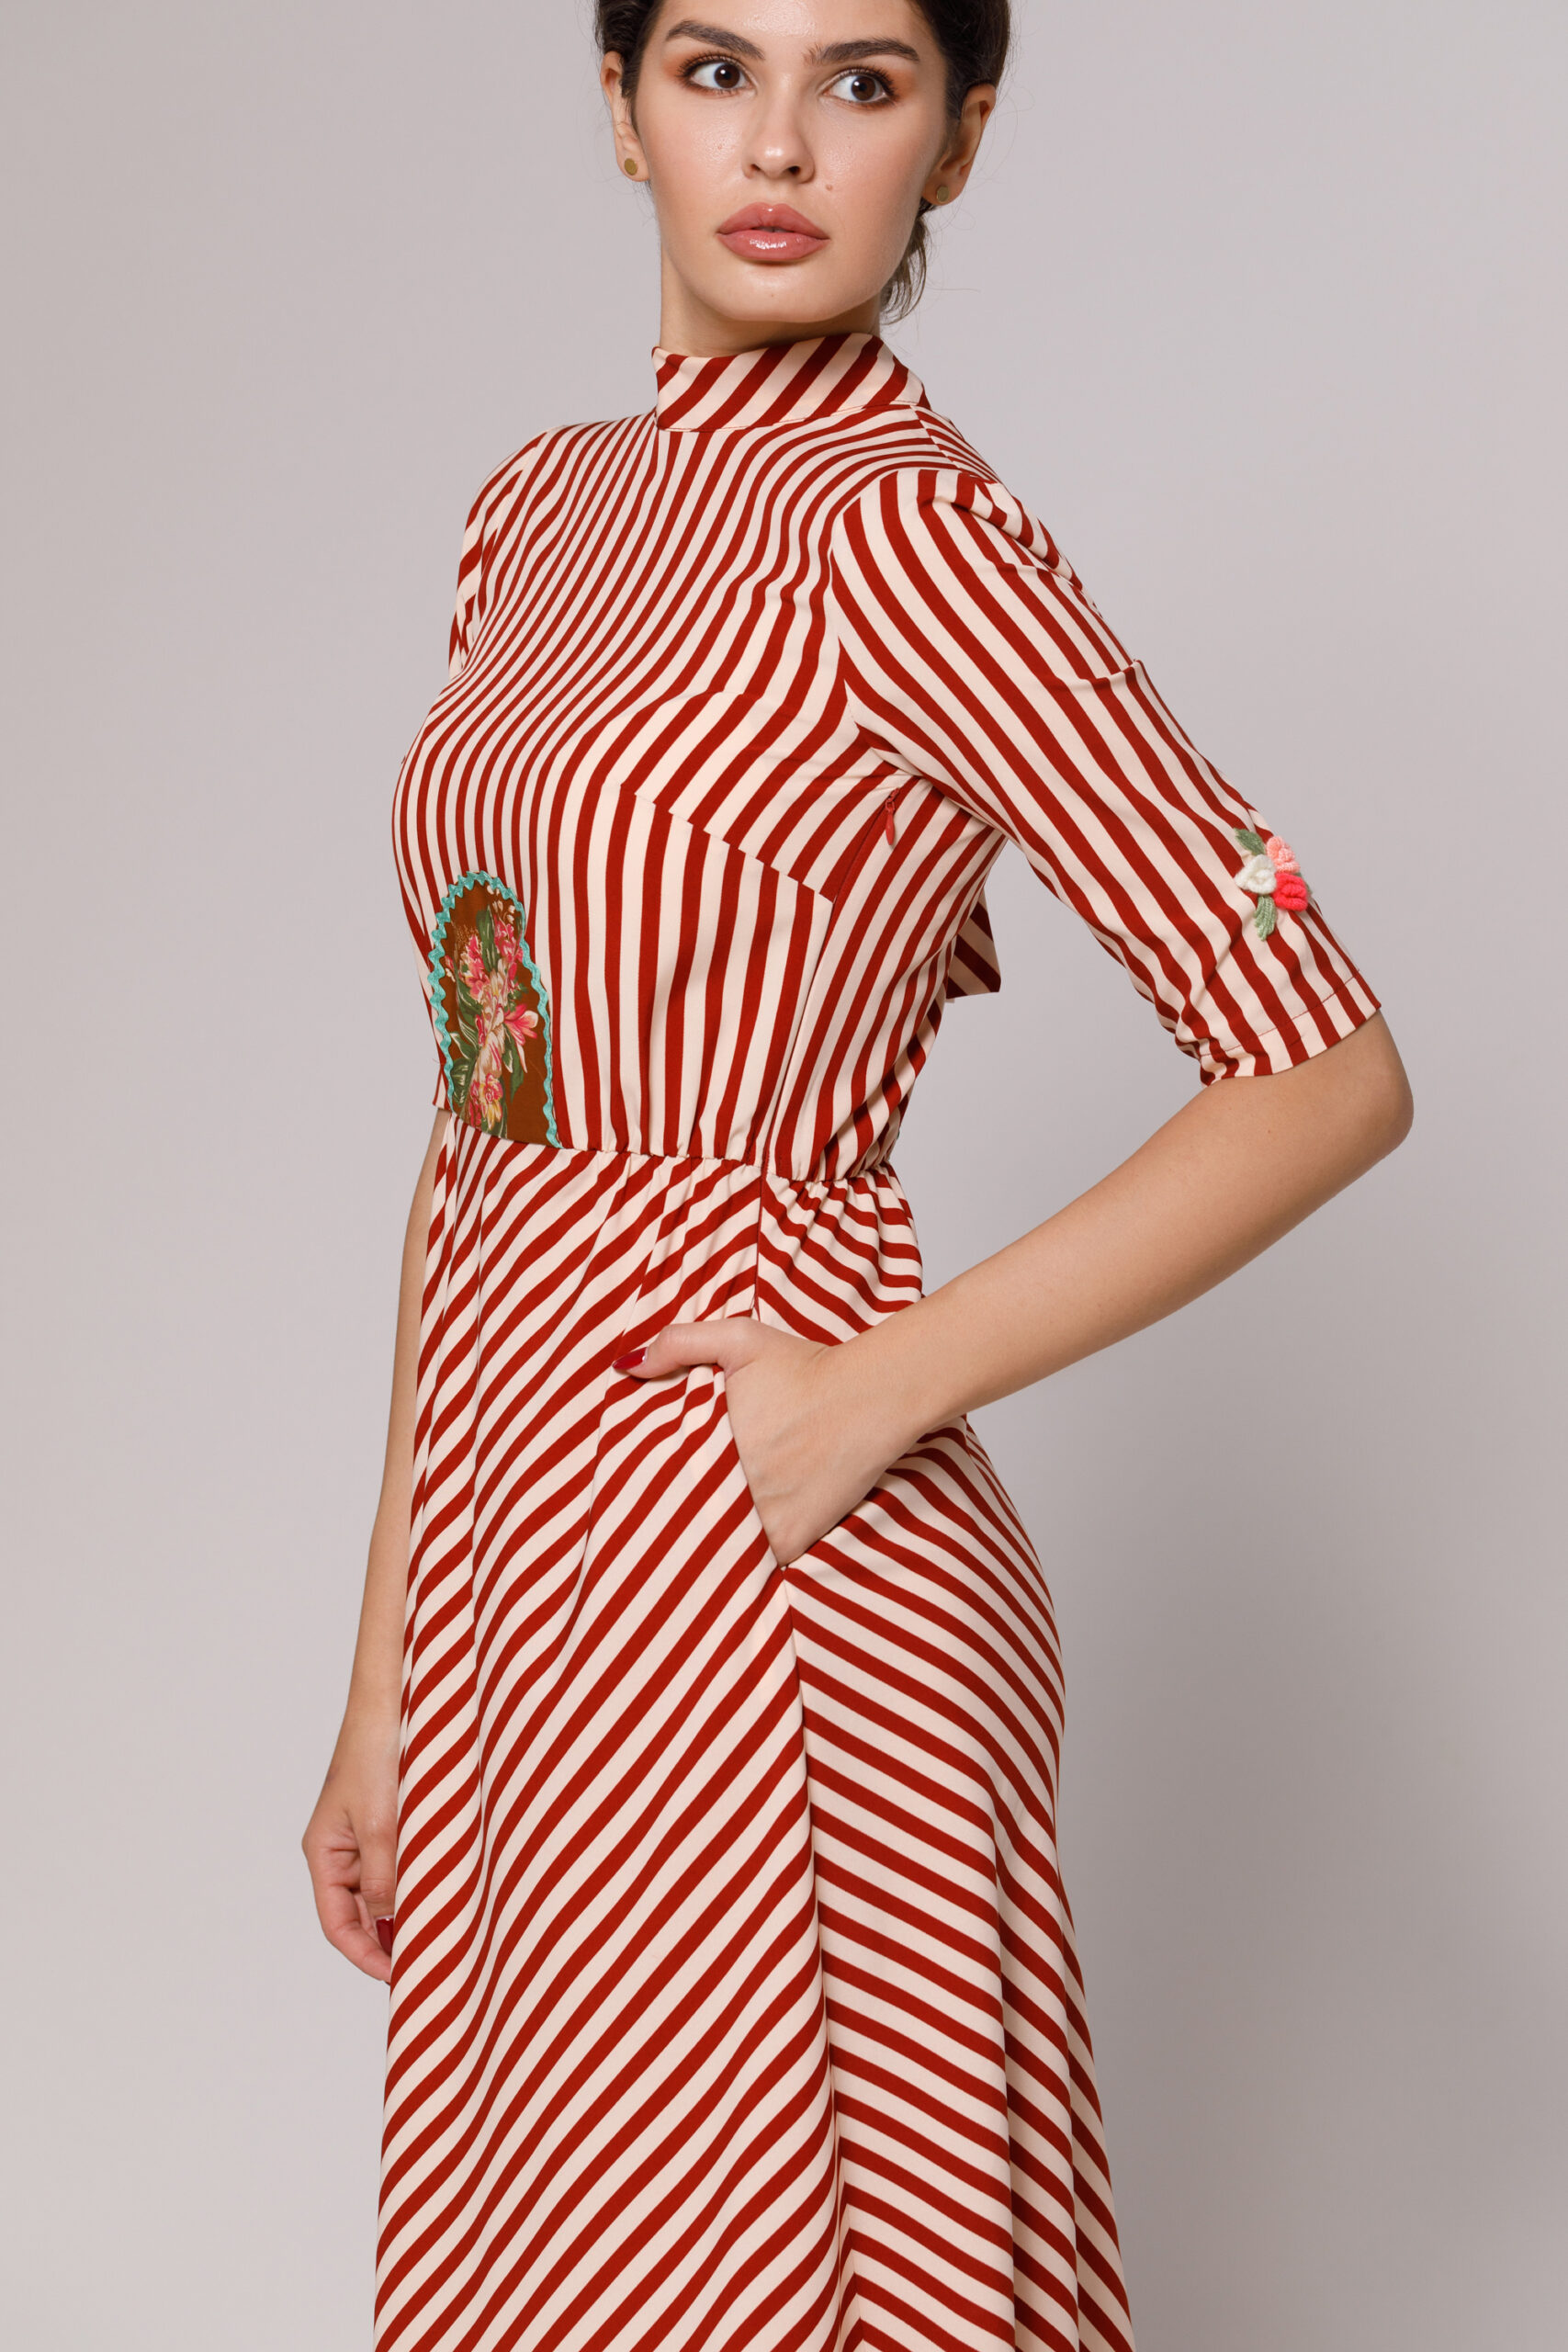 LORENE elegant striped viscose dress. Natural fabrics, original design, handmade embroidery